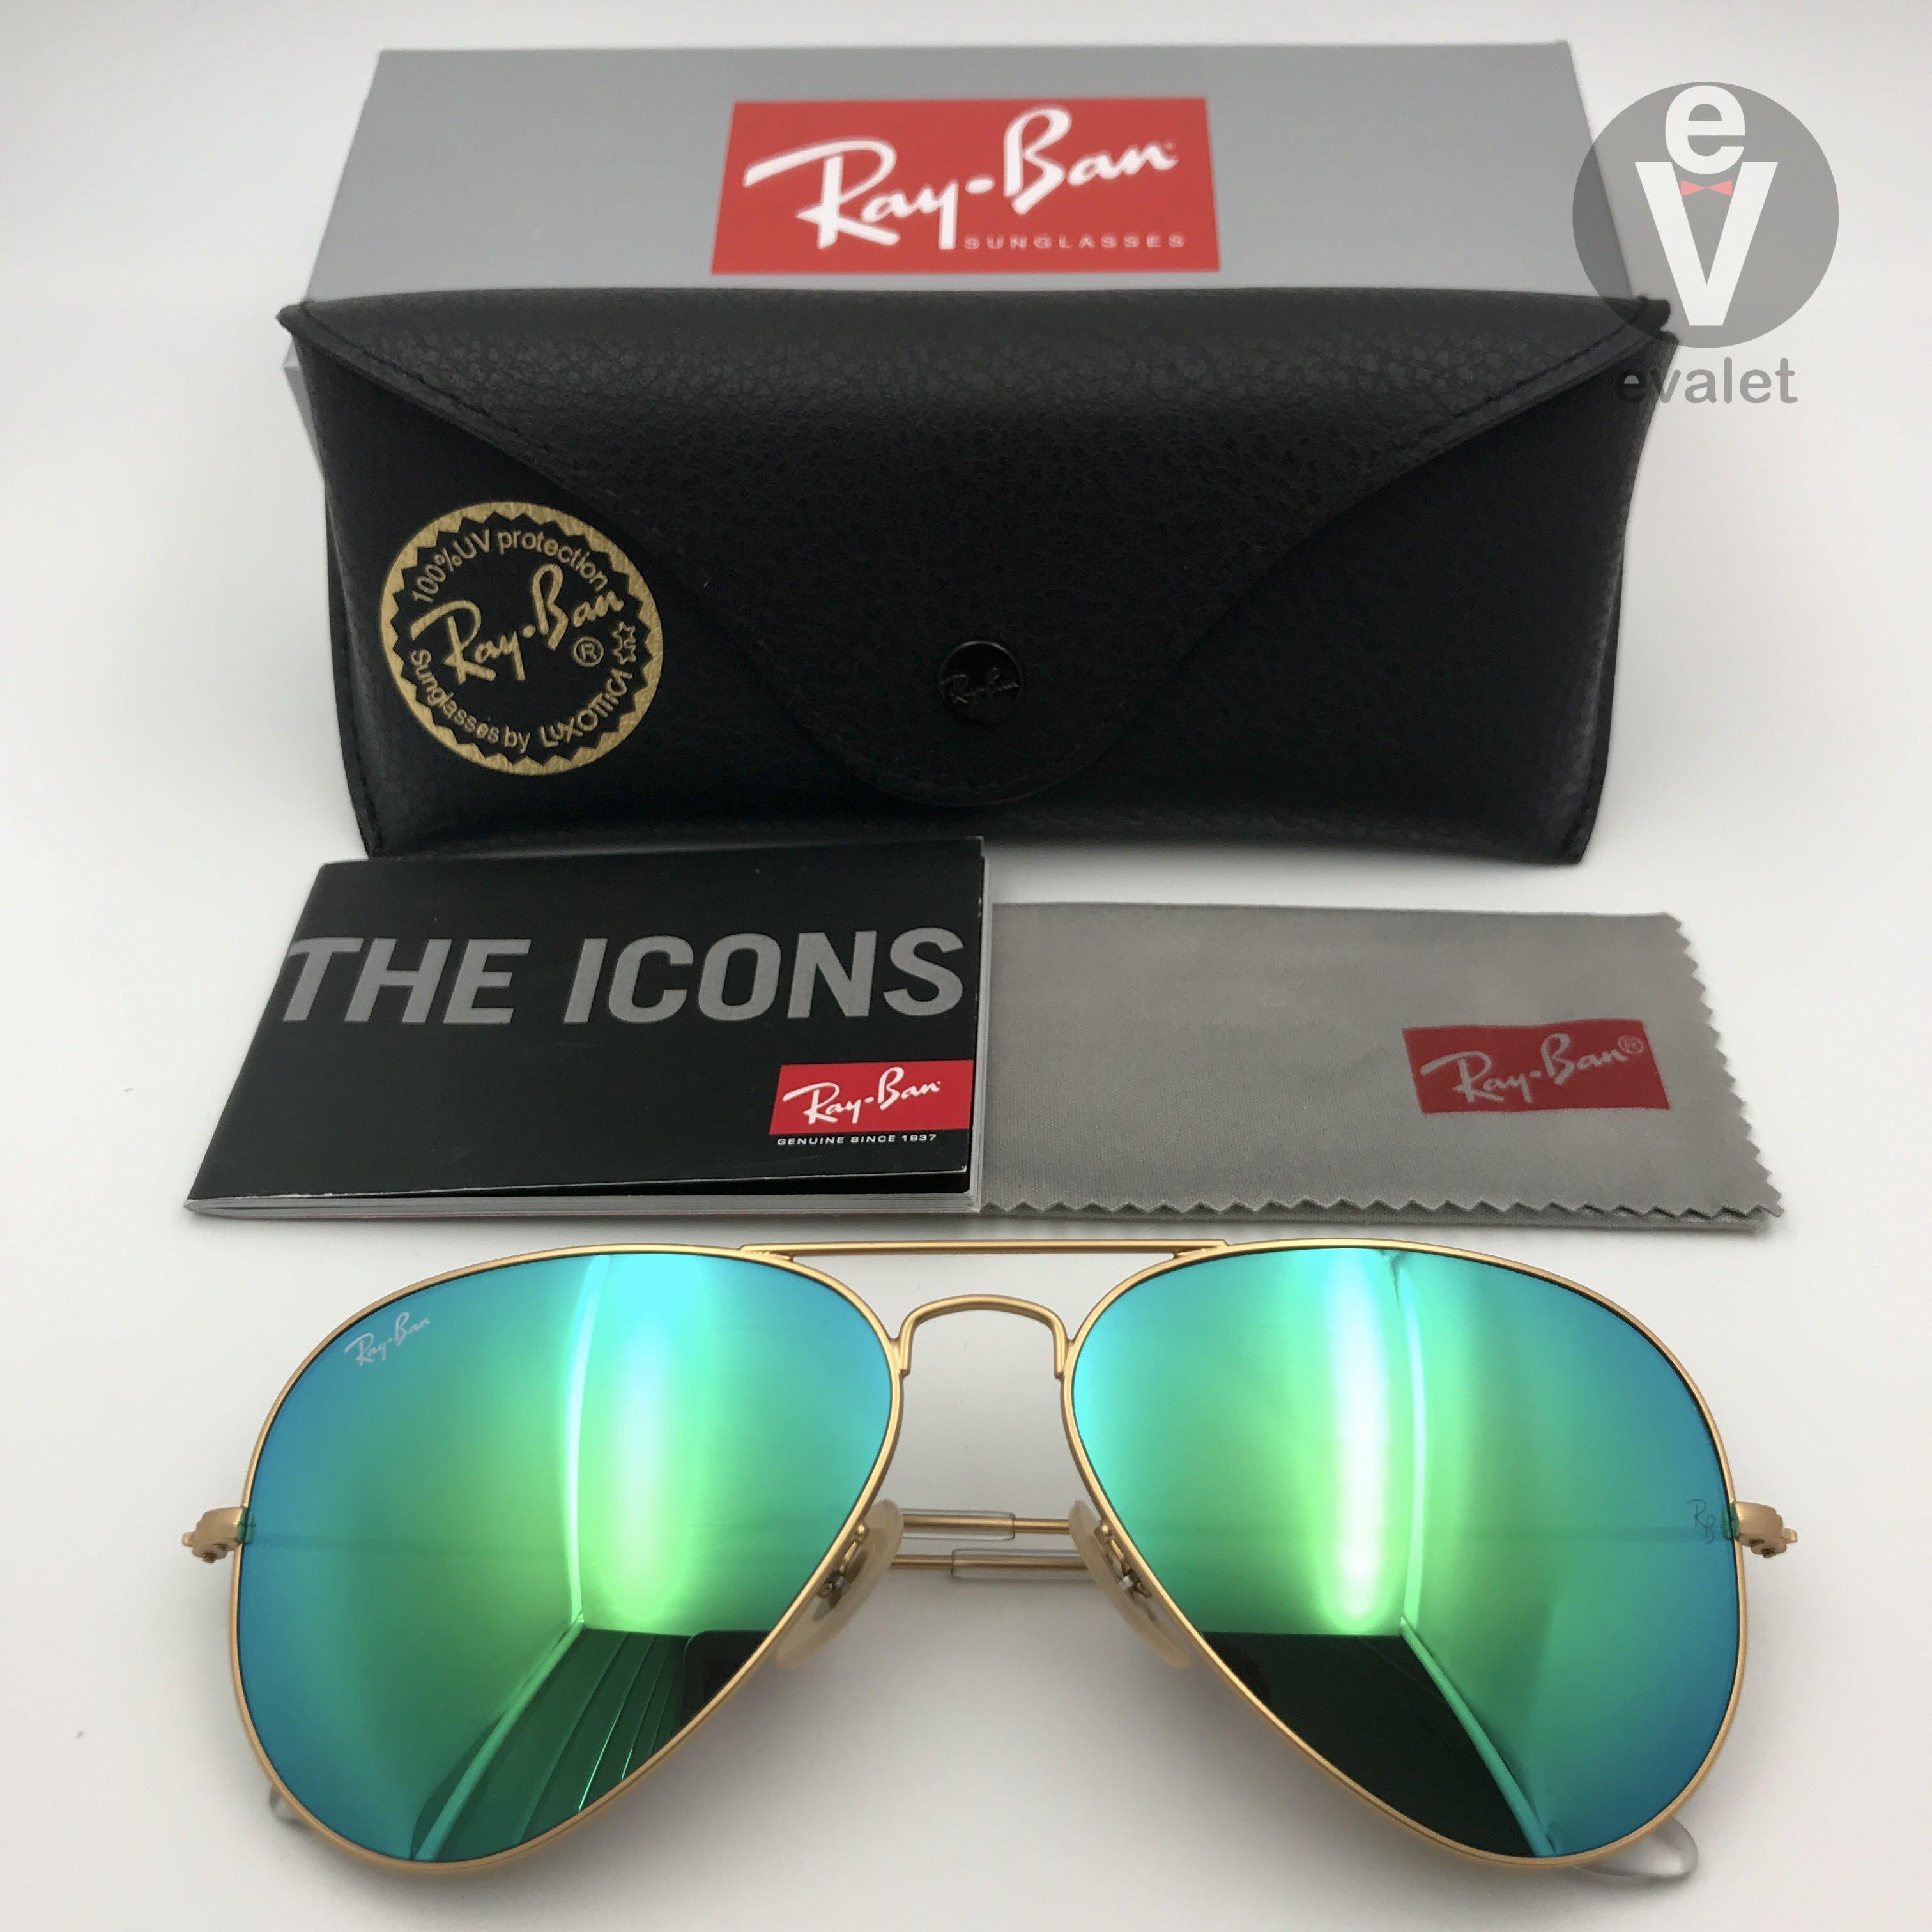 ray ban sunglasses 3025